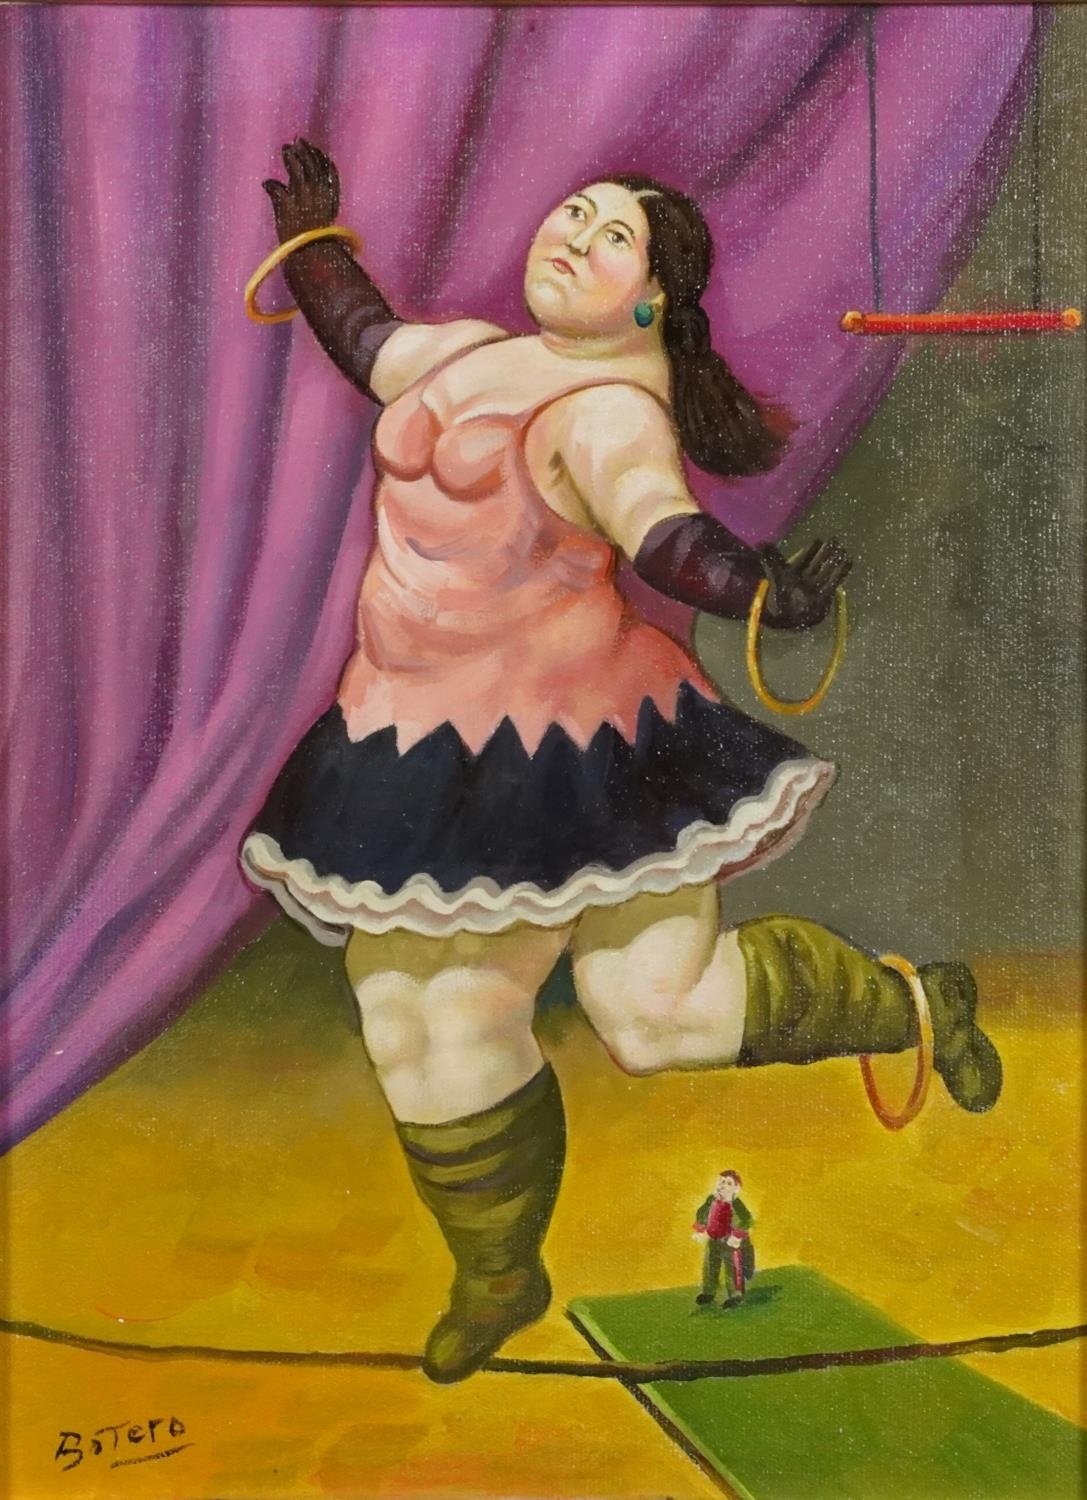 Circus performer by Fernando Botero